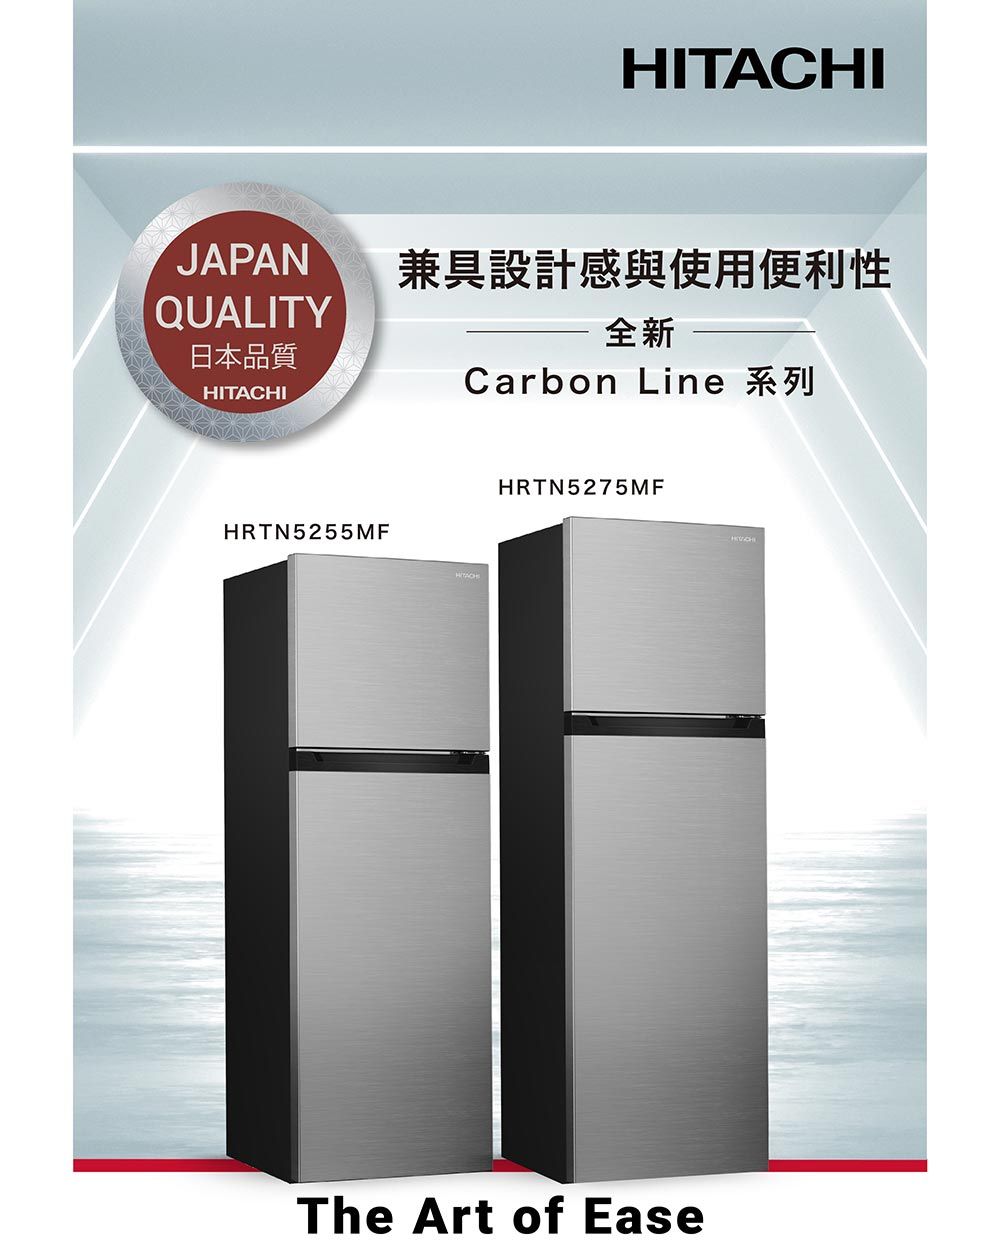 HITACHIJAPANQUALITY日本品質HITACHI兼具設計感與使用便利性全新Carbon Line 系列HRTN5275MFHRTN5255MFThe Art of Ease